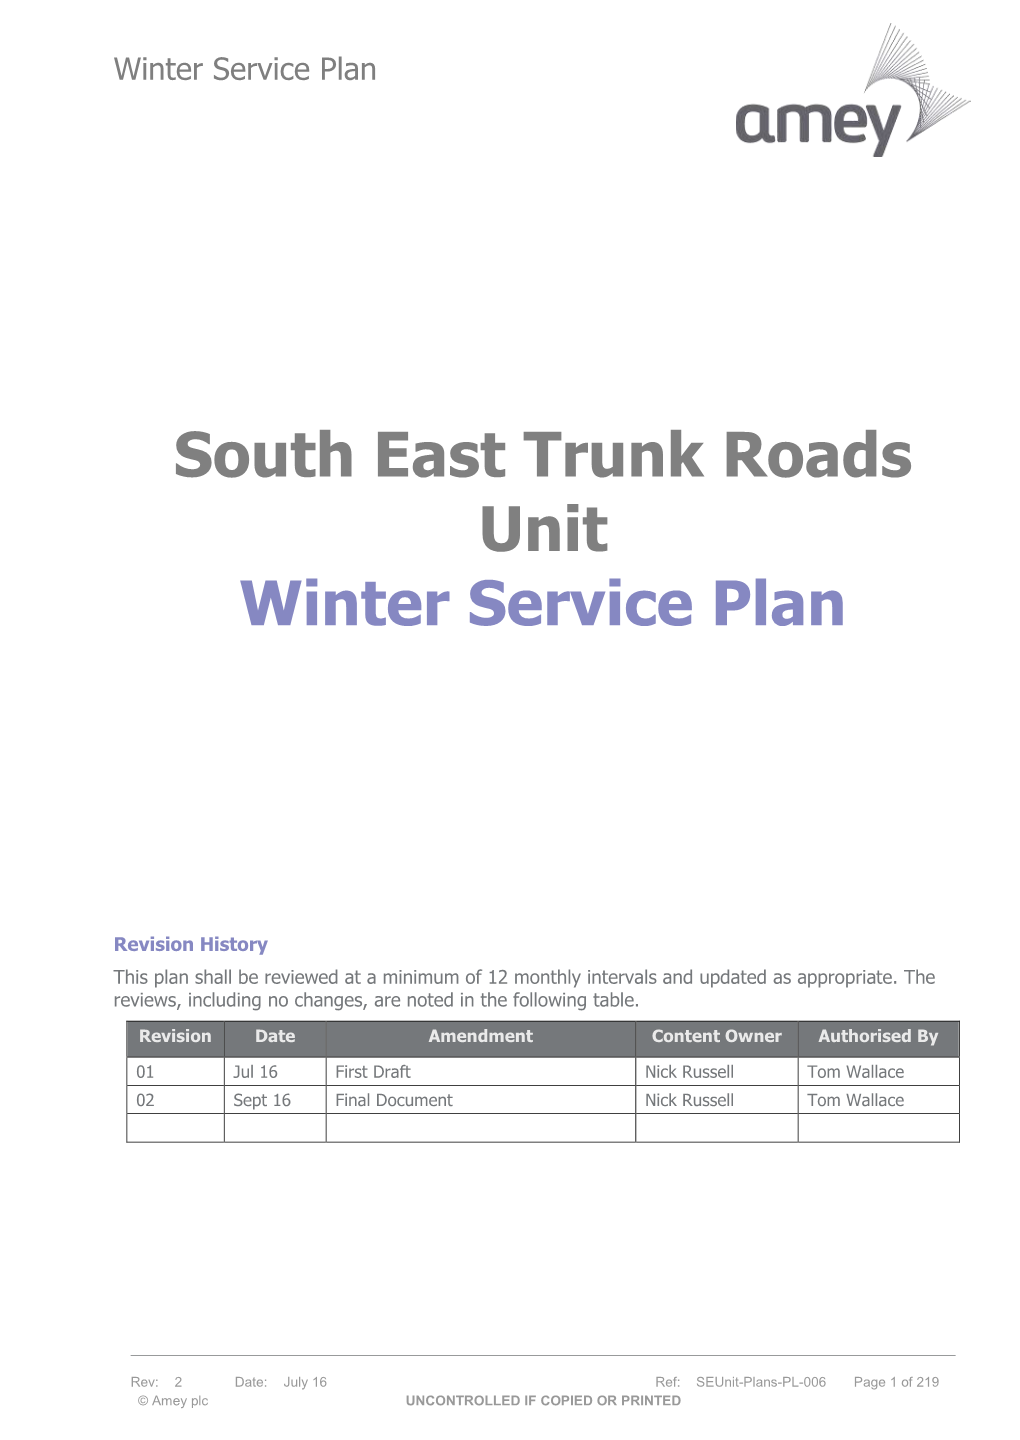 South East Trunk Roads Unit Winter Service Plan